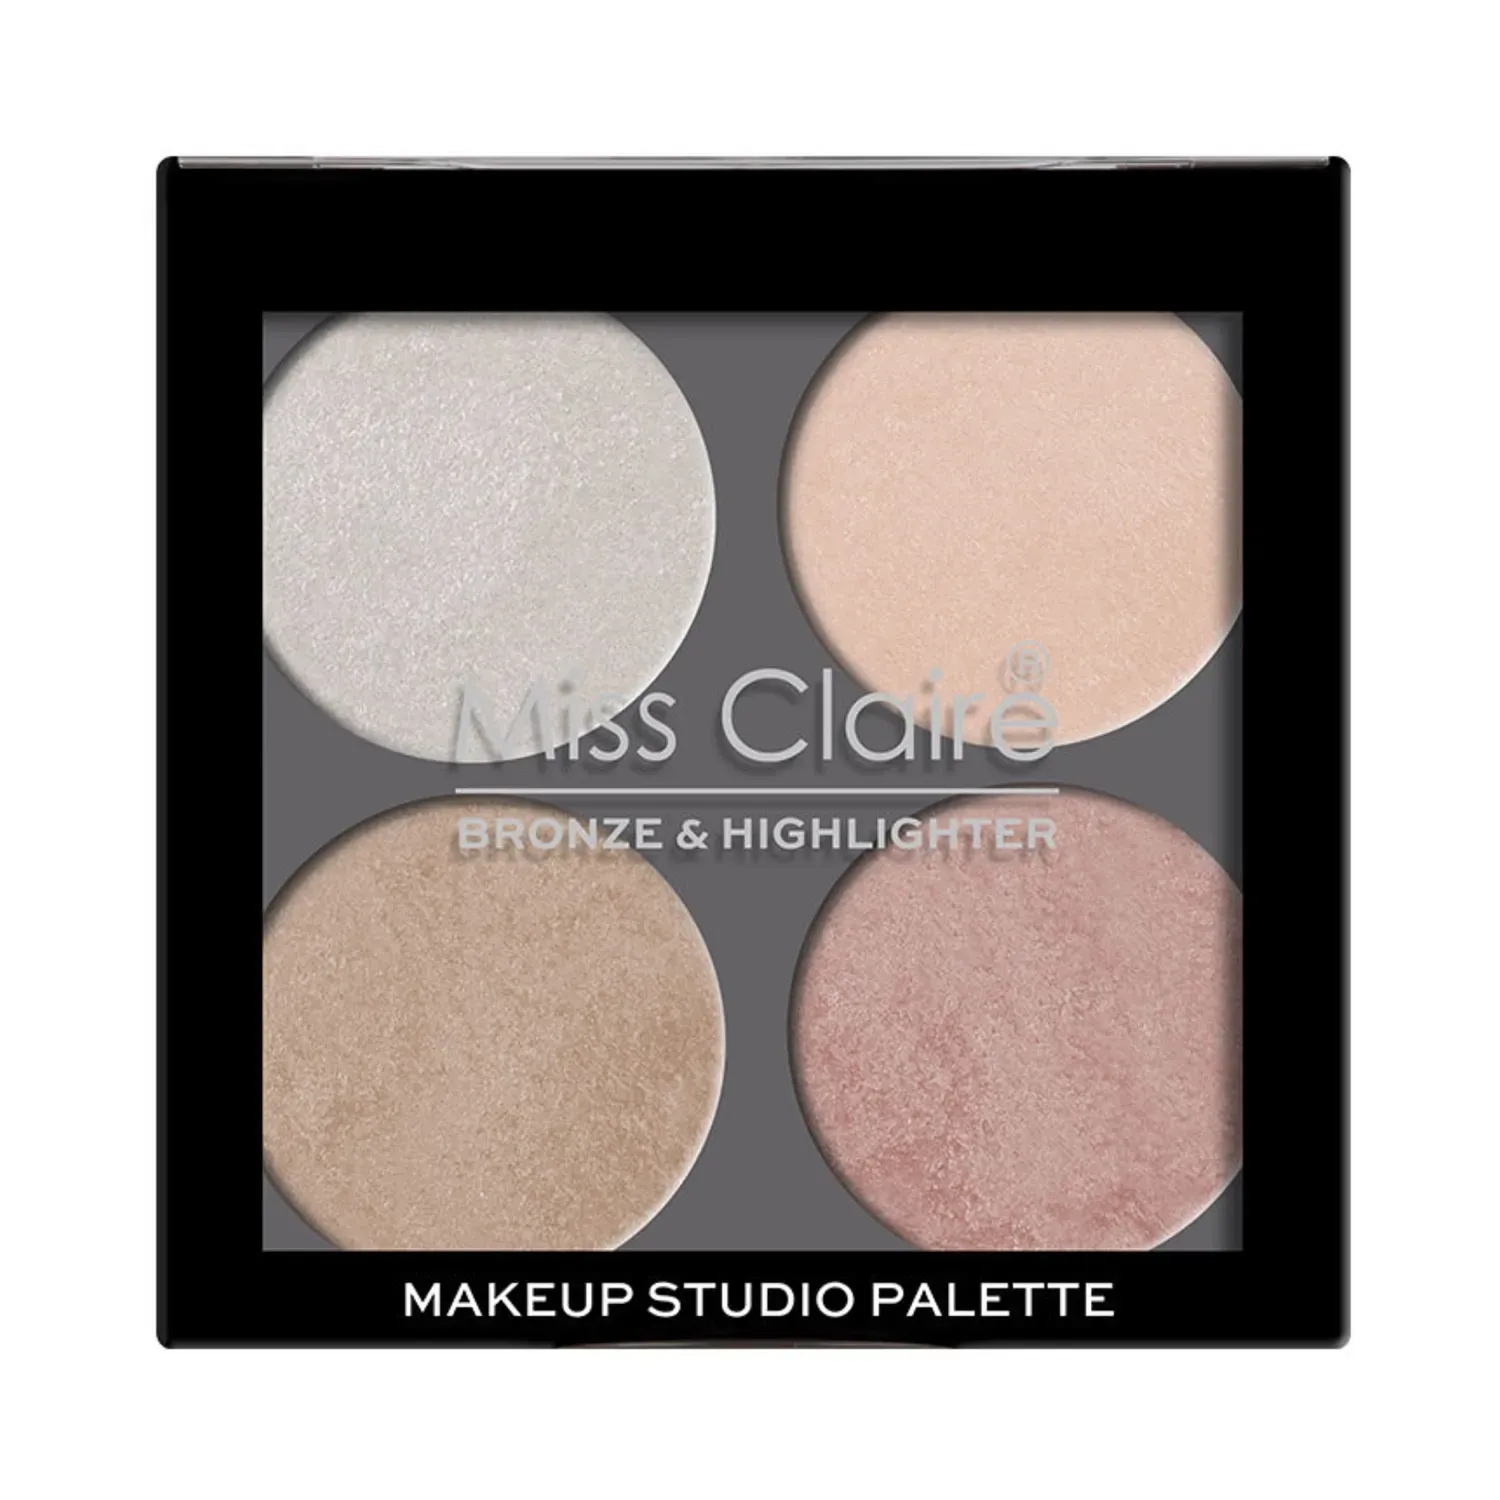 Miss Claire | Miss Claire Bronze & Highlighter Makeup Studio Palette - 2 (8g)